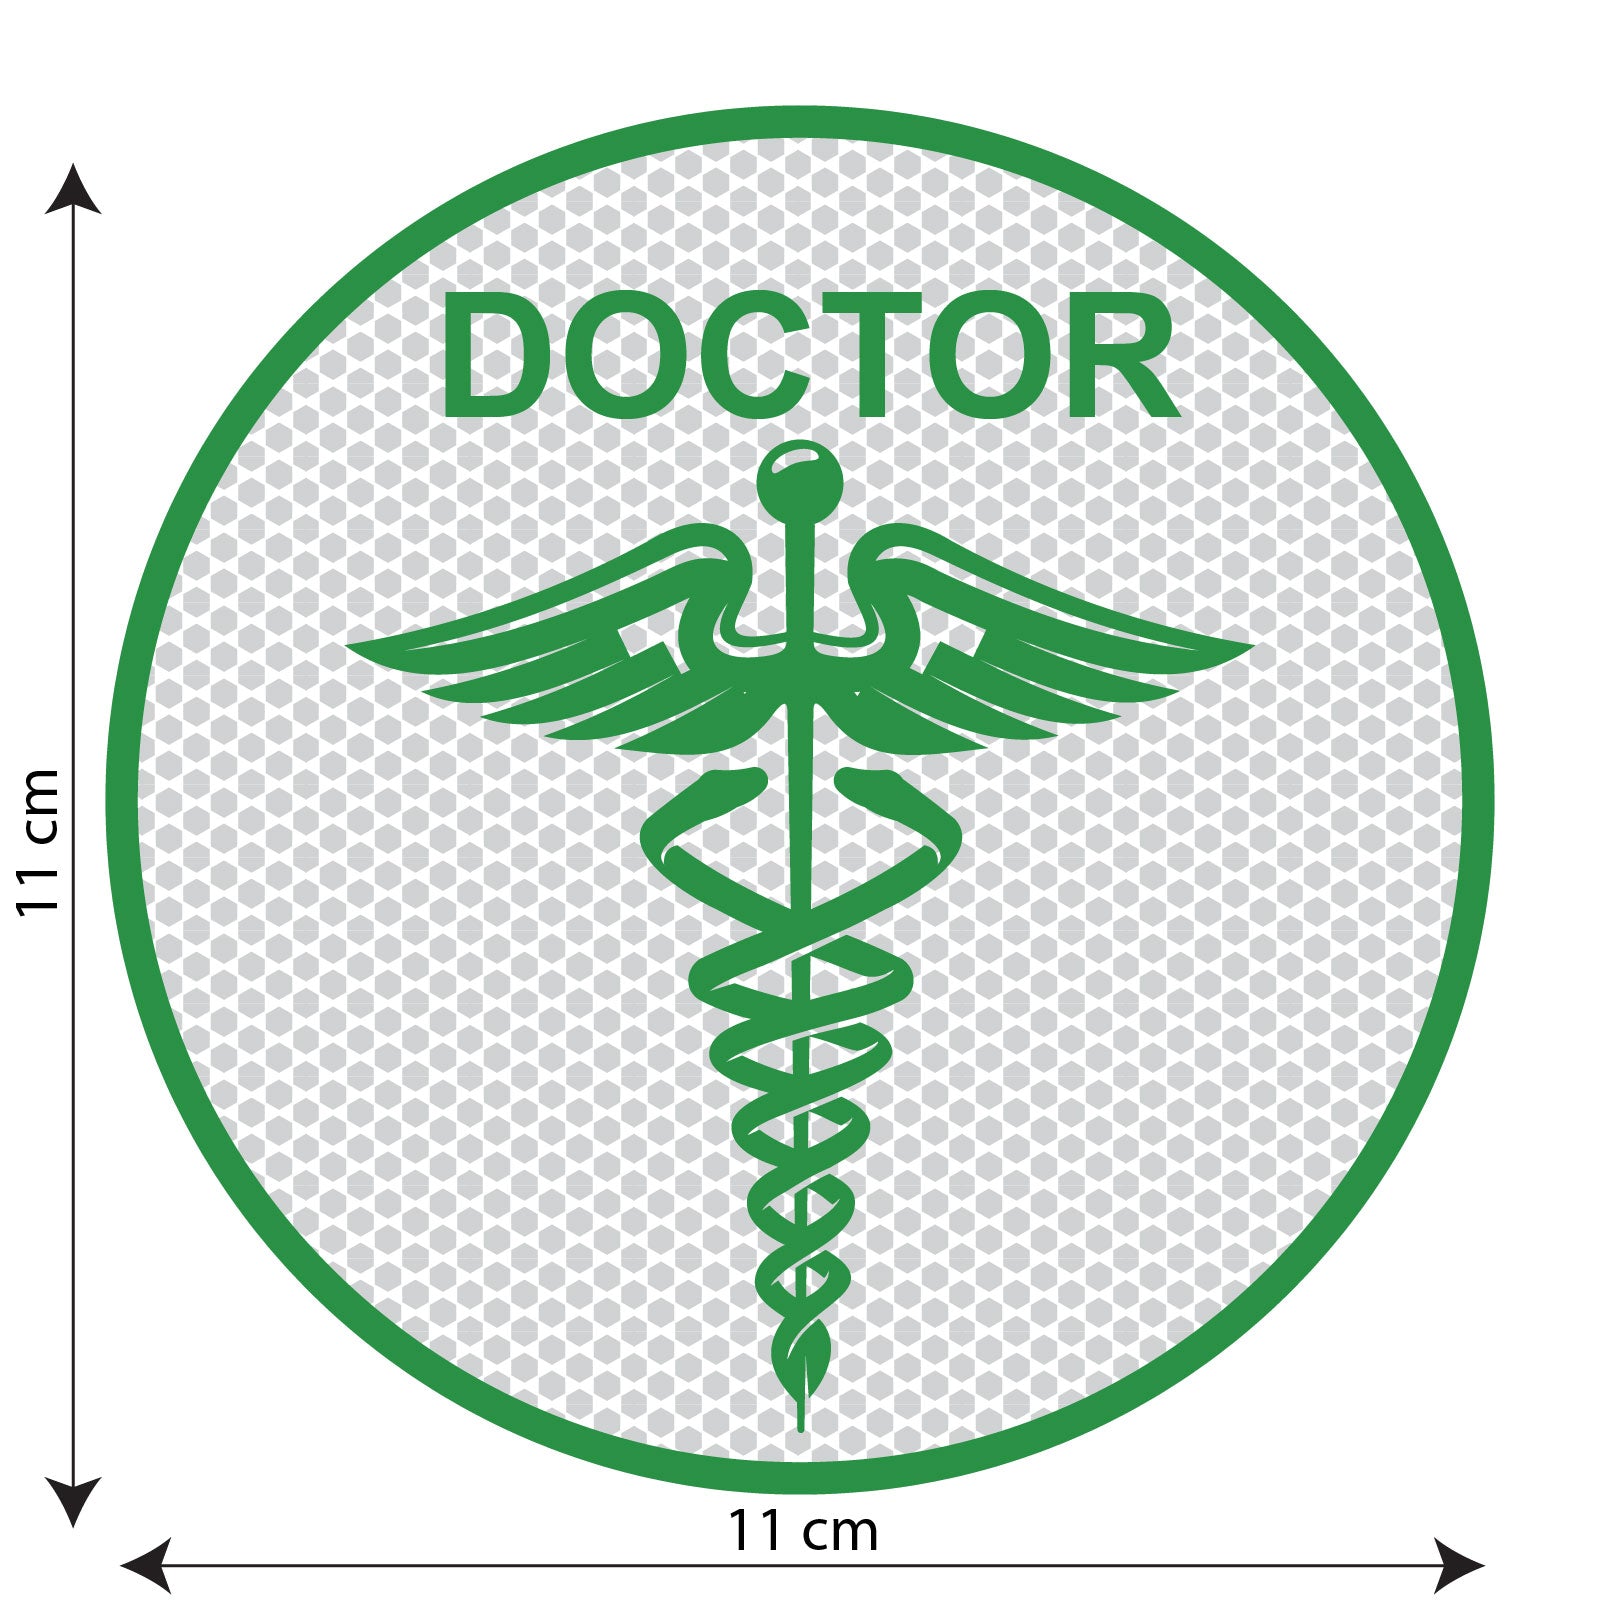 MD Medical Doctor Oval Symbol Sign Car Bumper Window Sticker Decal 6